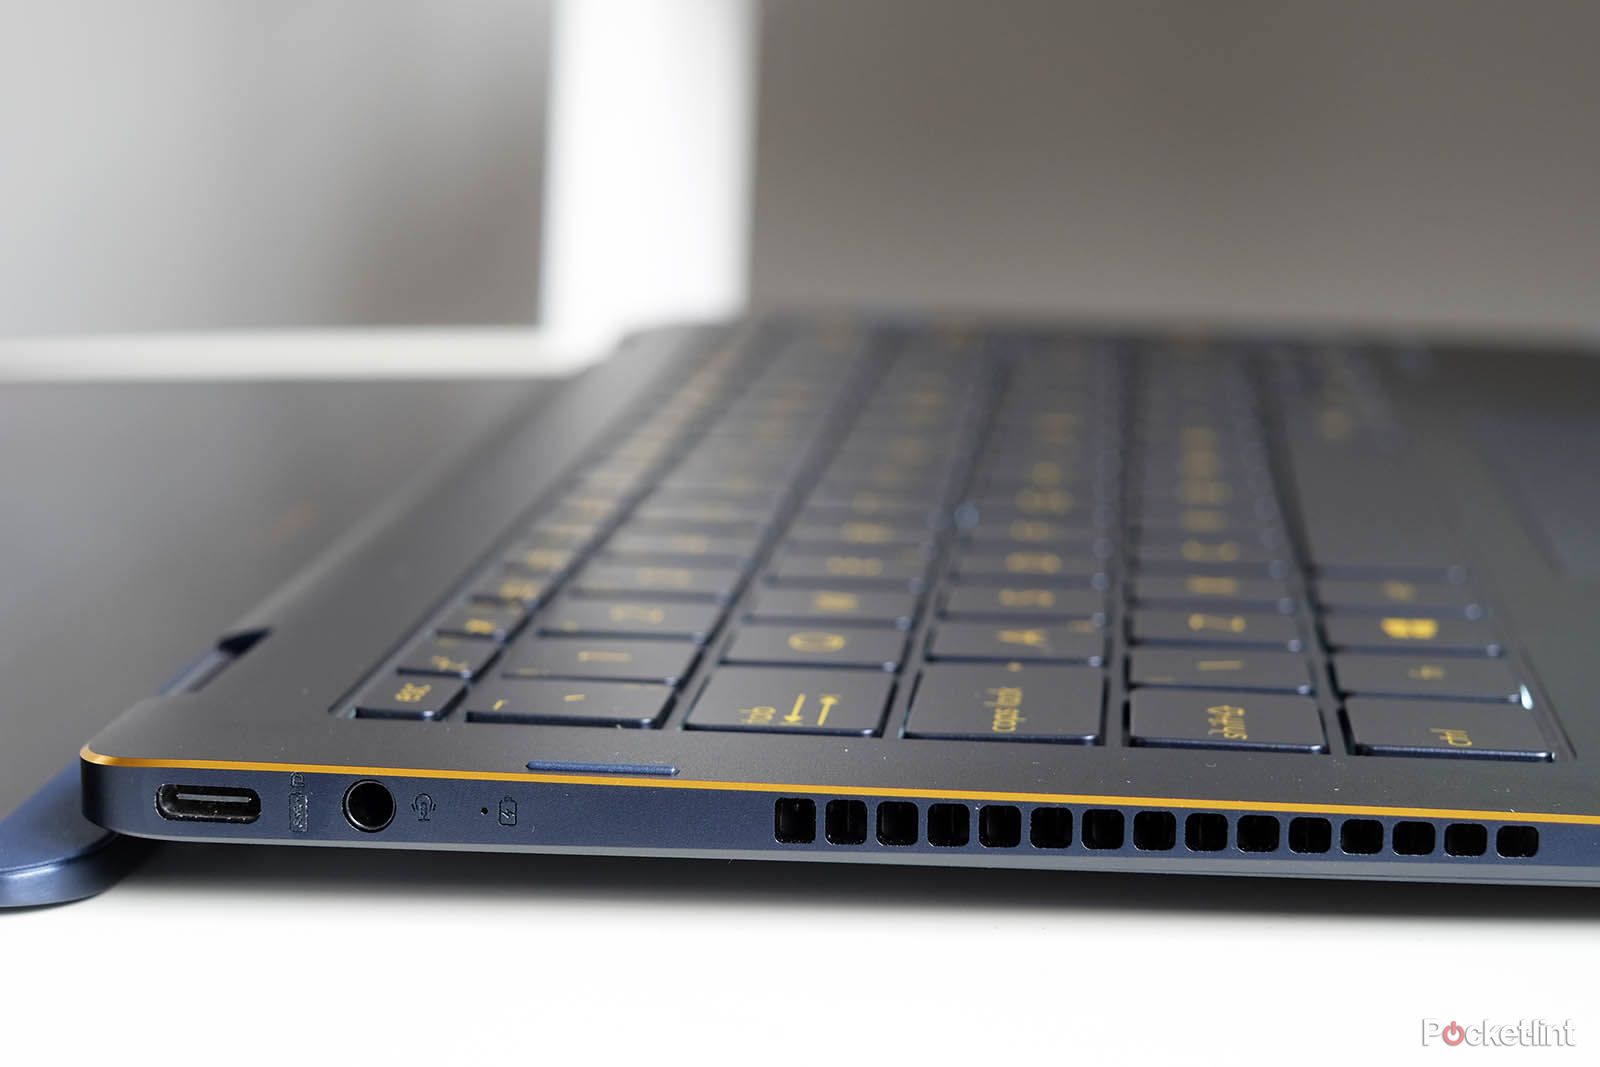 Asus ZenBook Flip S review image 10